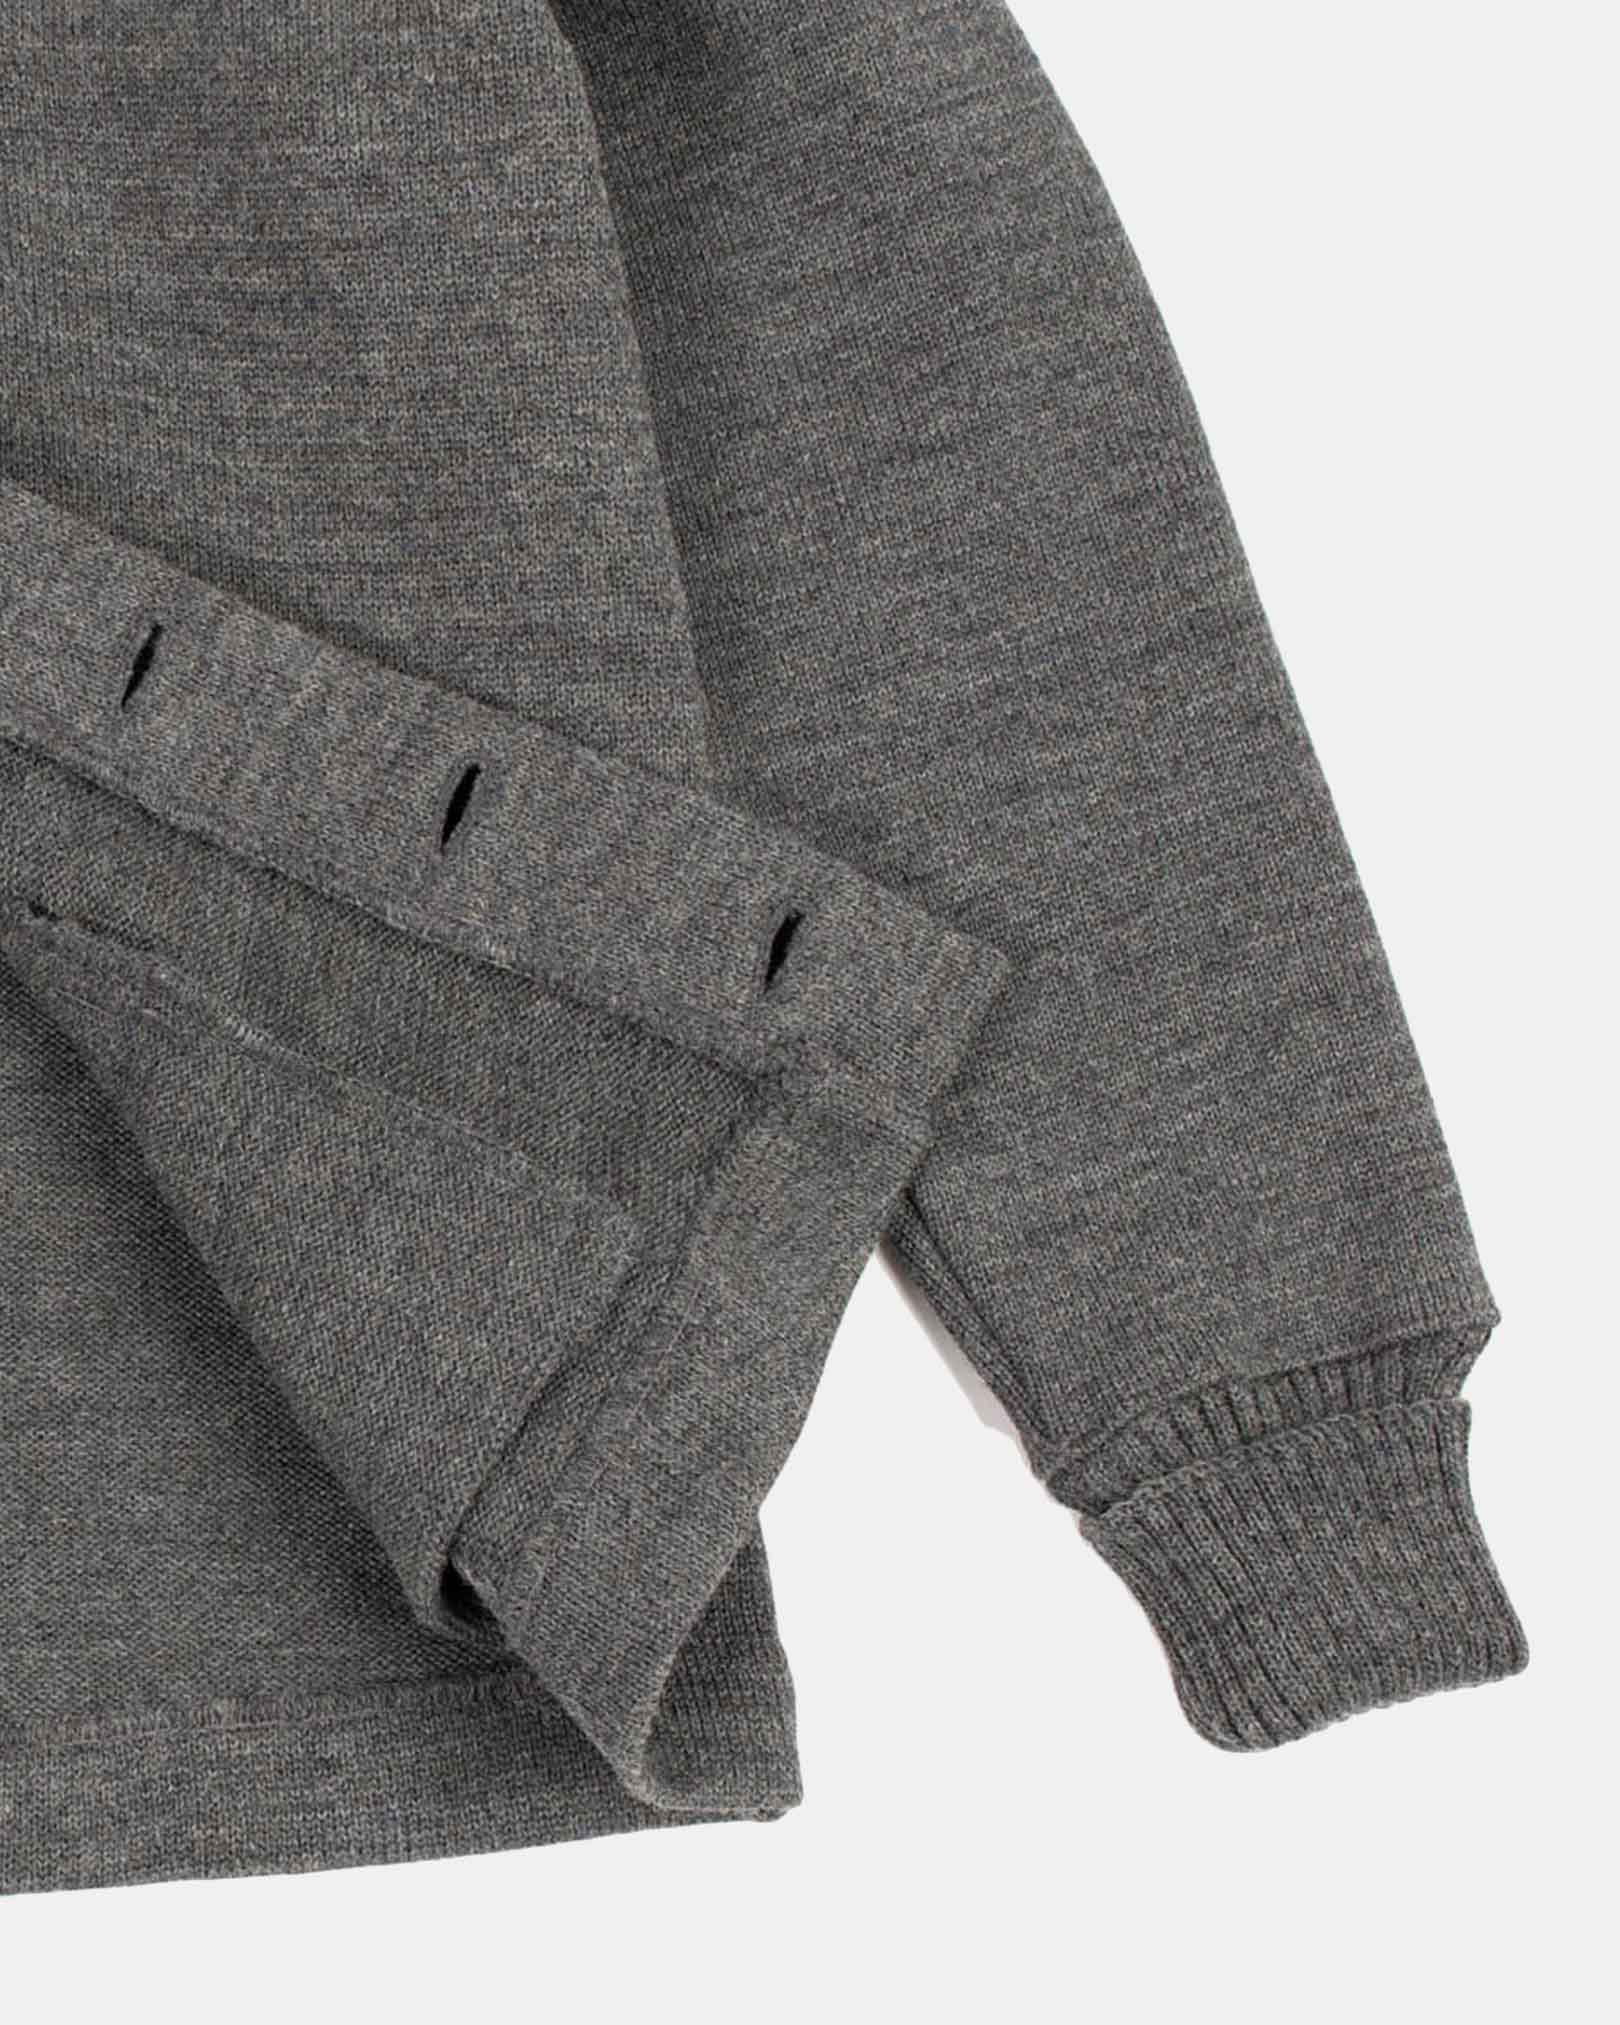 Shawl Sweater Coat Charcoal